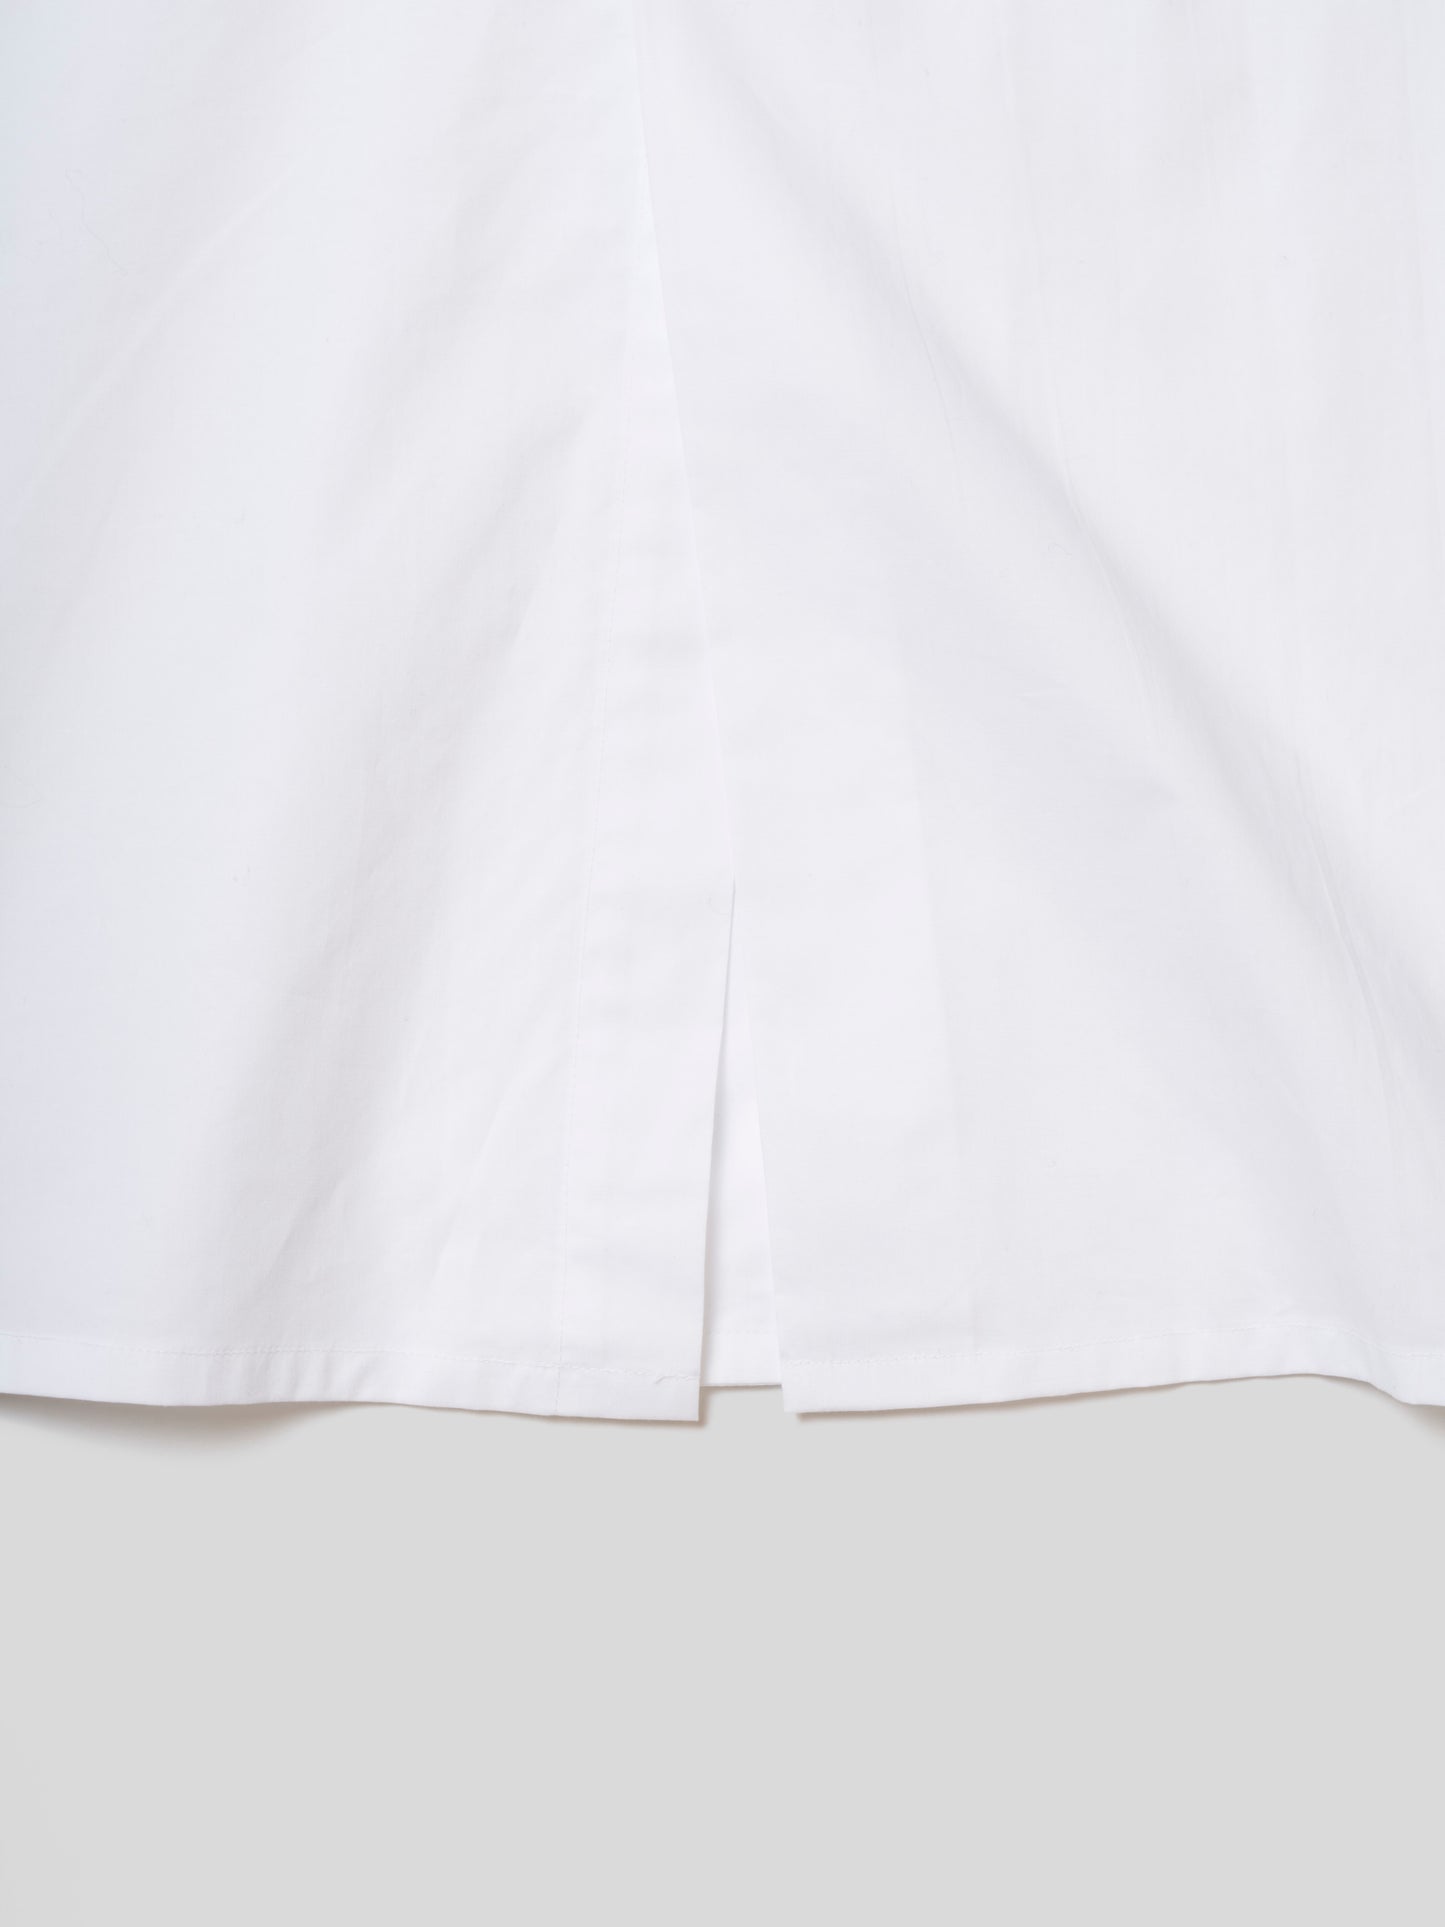 BOWLING SHIRT DRESS/ WHITE